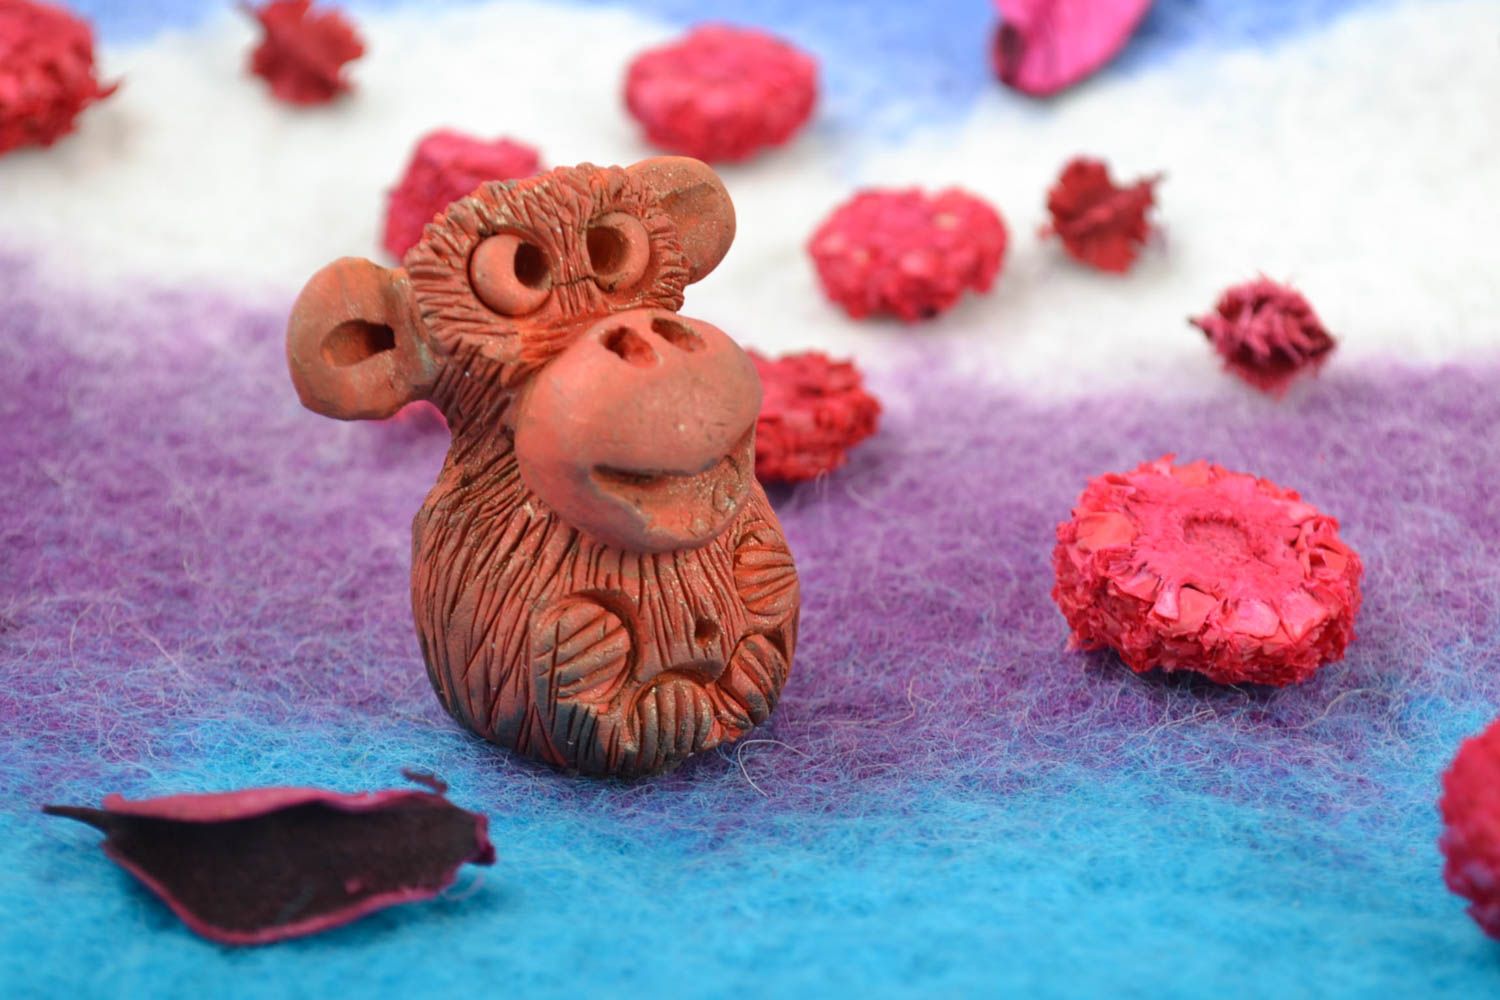 Small funny souvenir collectible ceramic animal figurine of smiling monkey photo 1